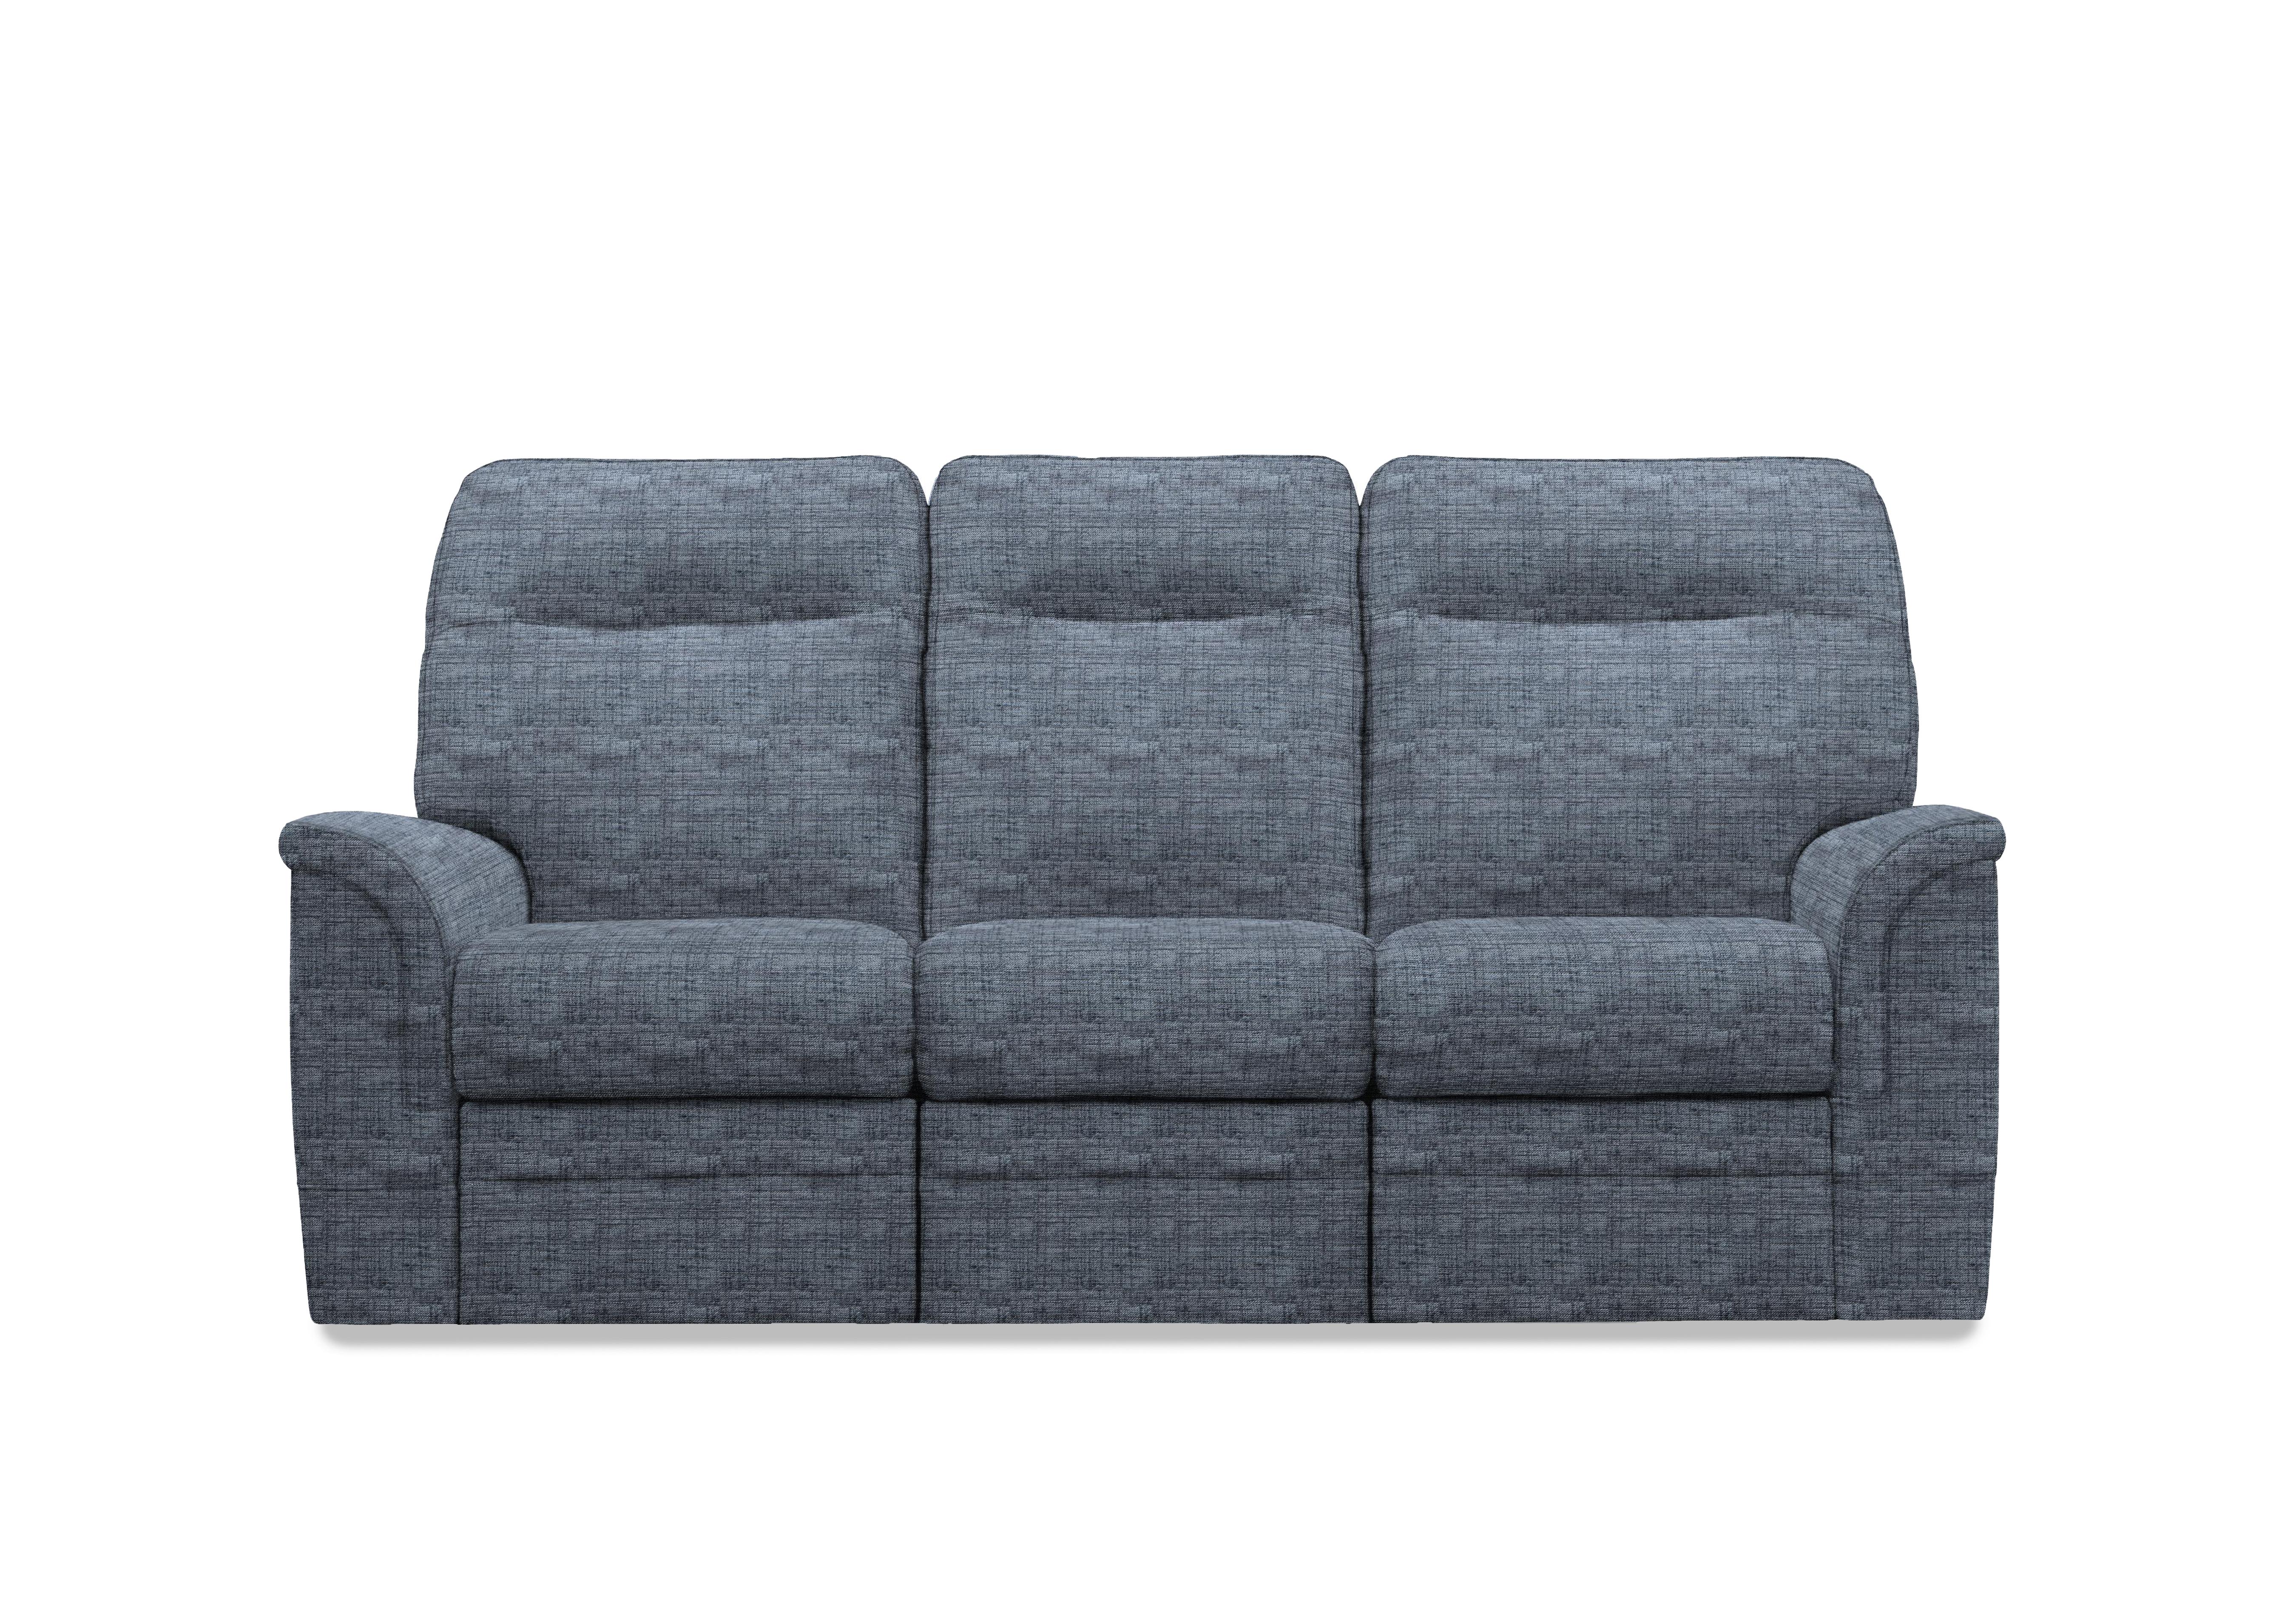 Hudson 23 Fabric 3 Seater Sofa in Dash Blue 001497-0080 on Furniture Village